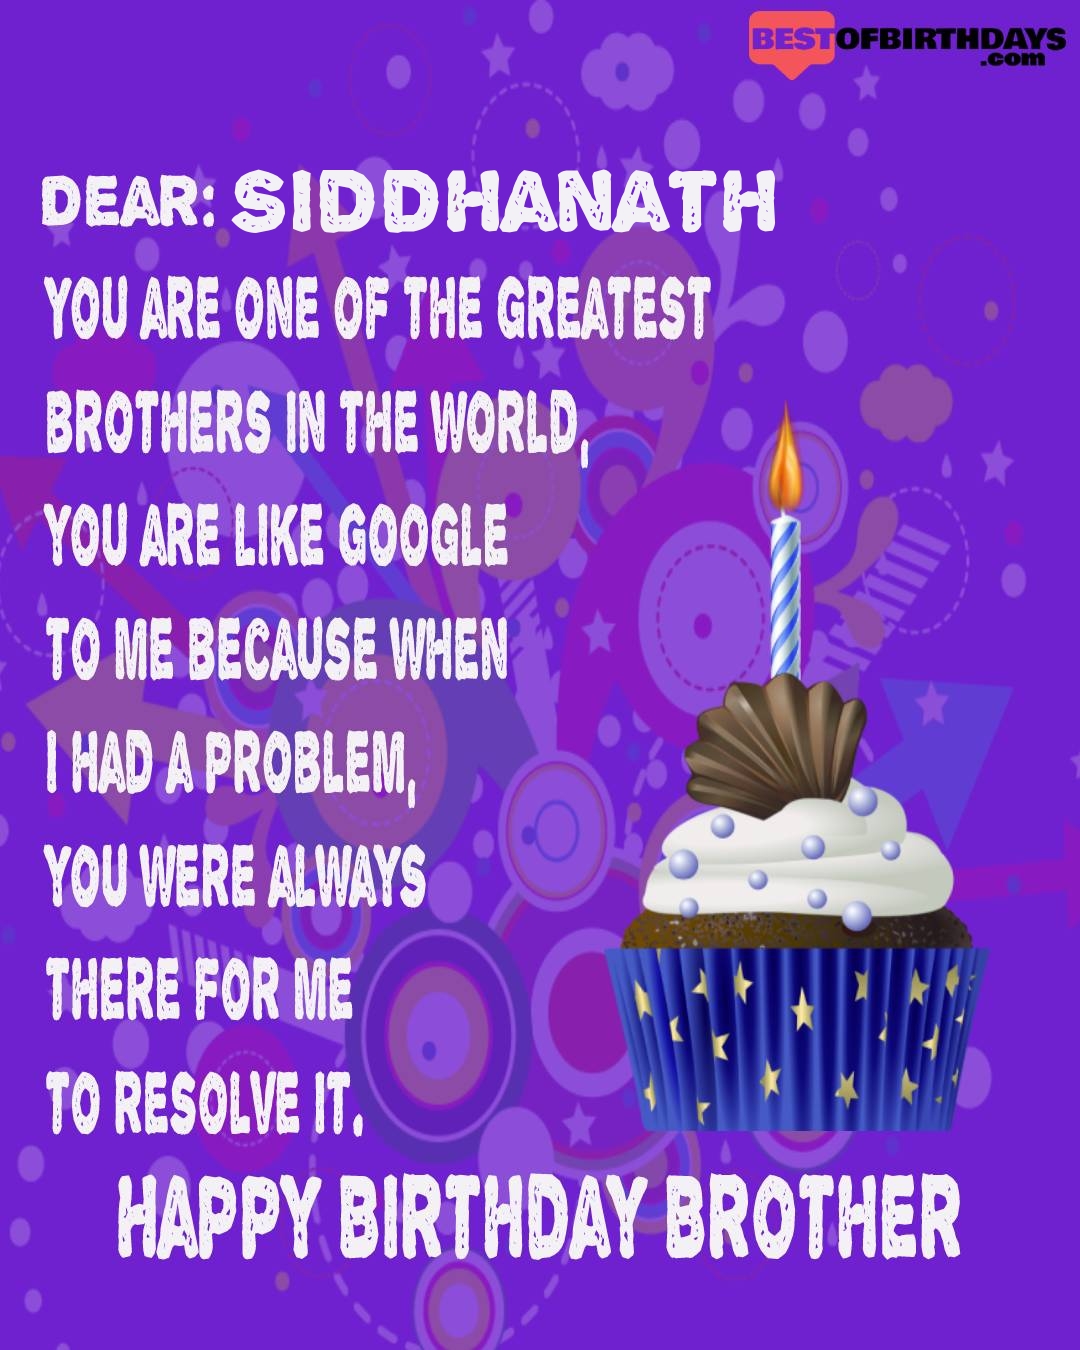 Happy birthday siddhanath bhai brother bro